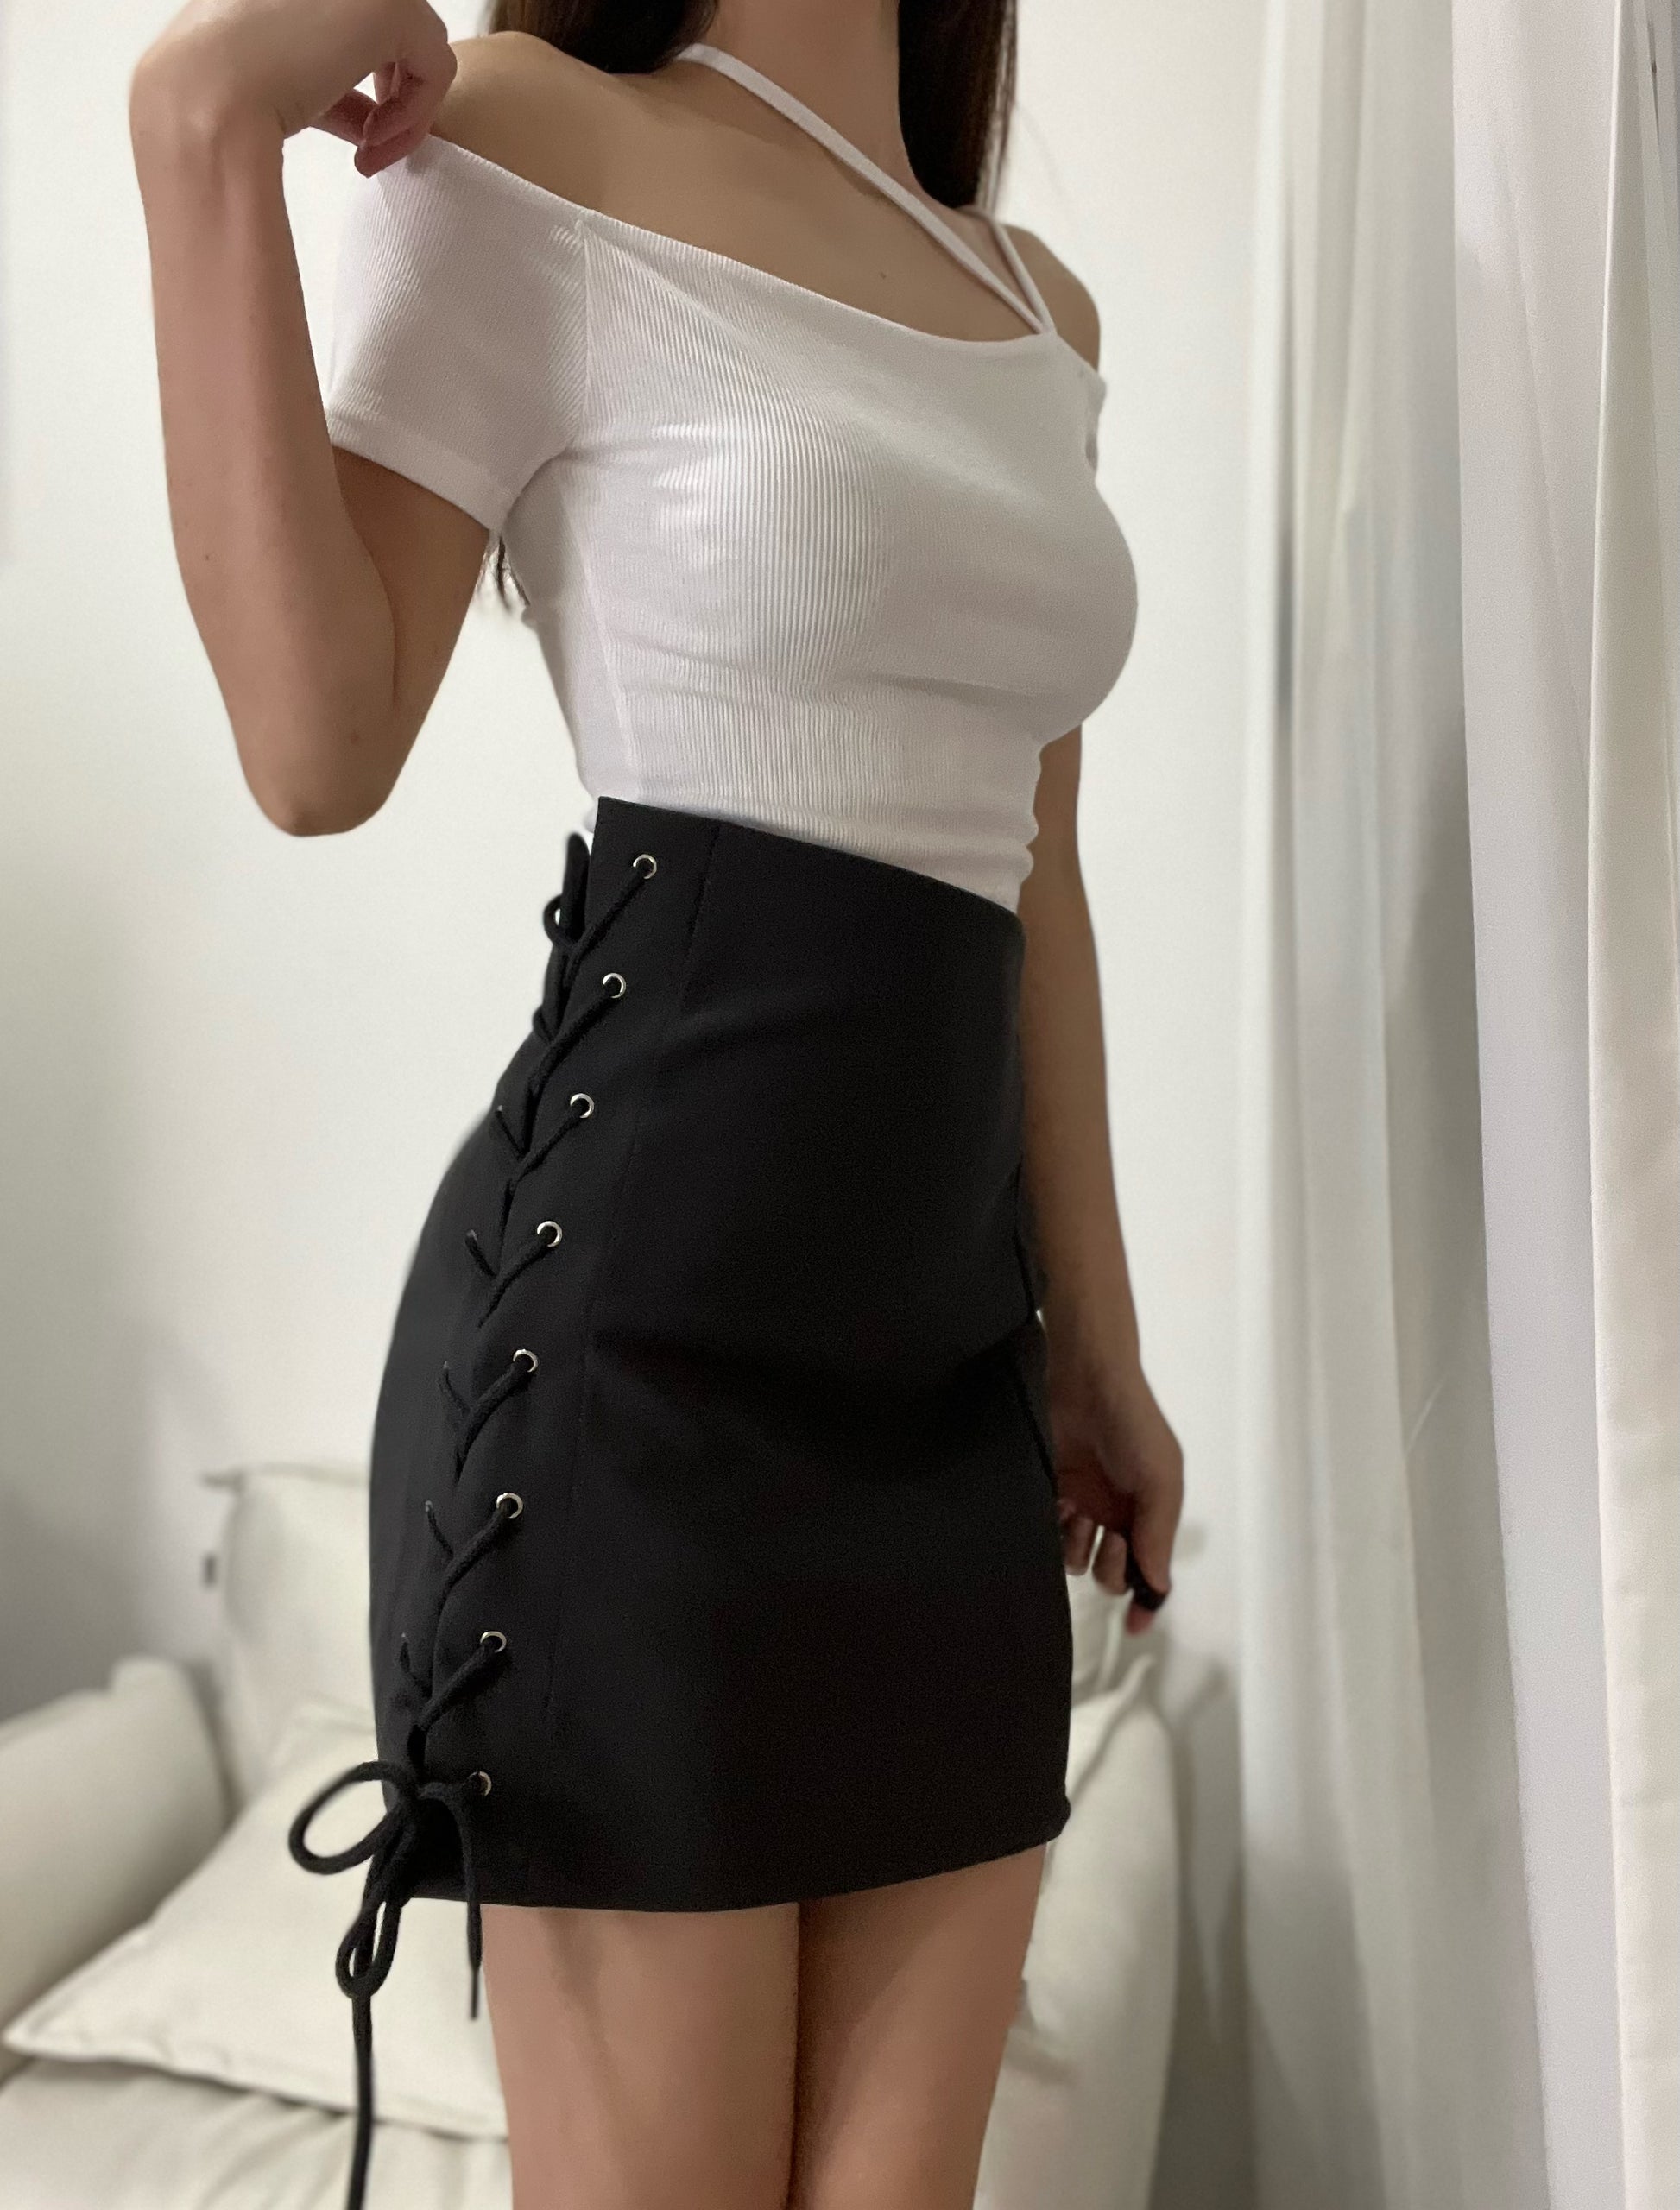 [HOT,鞋帶包臀短裙] Shoelace Skirt - MG062